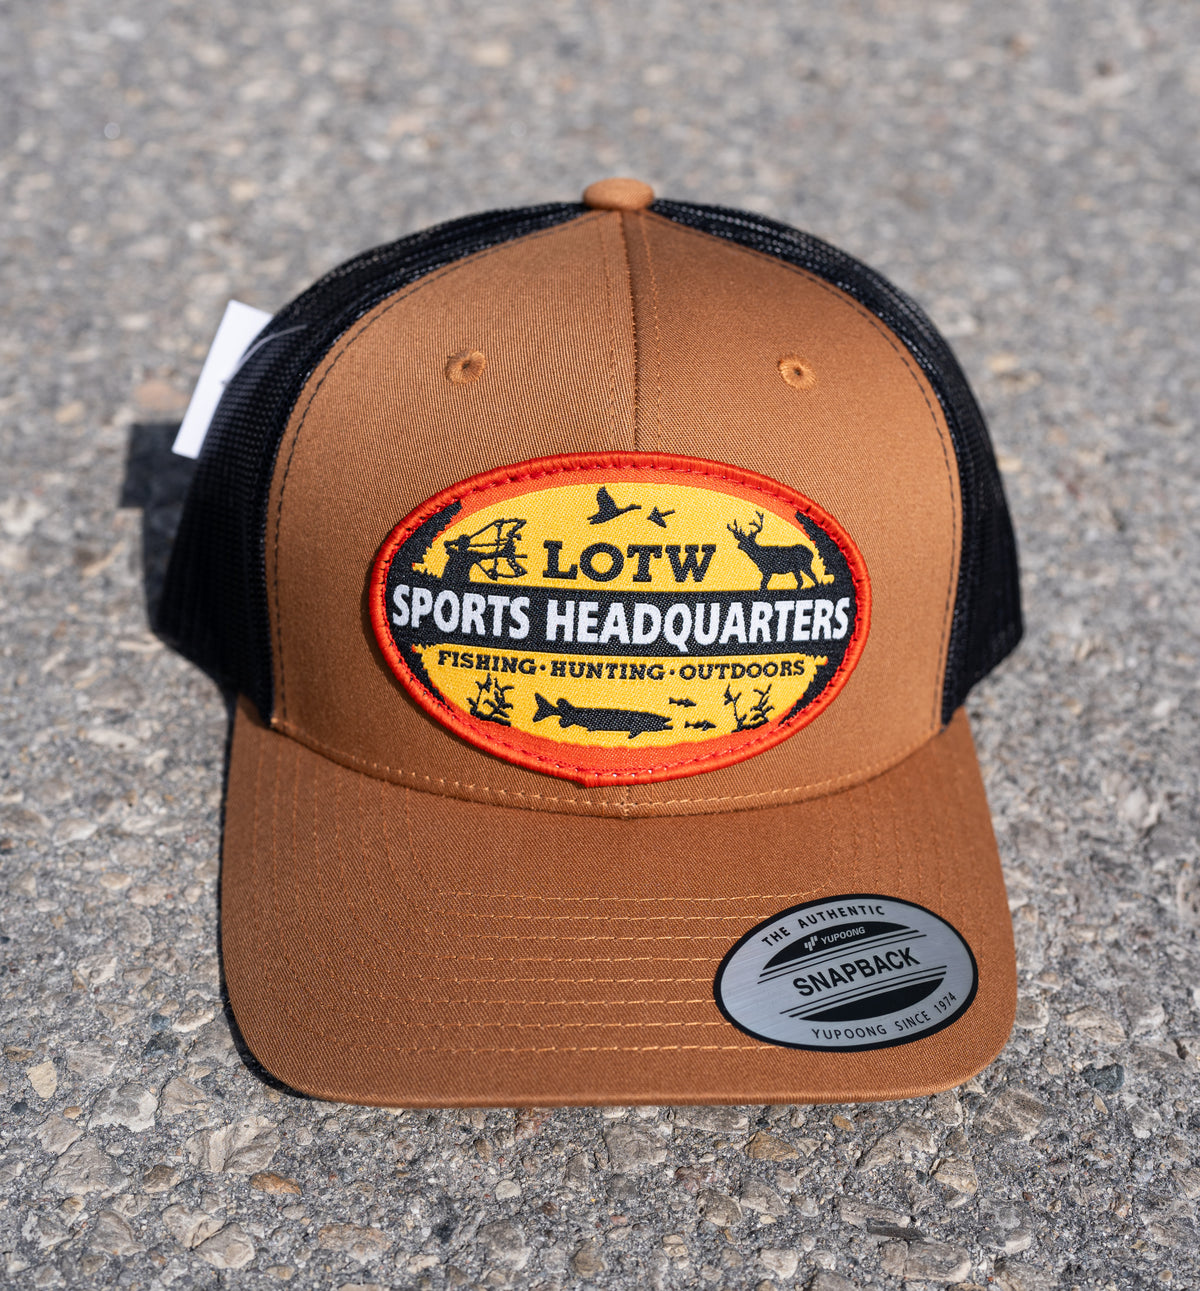 LOTW Sports Headquarters Retro Snapback Trucker Hats